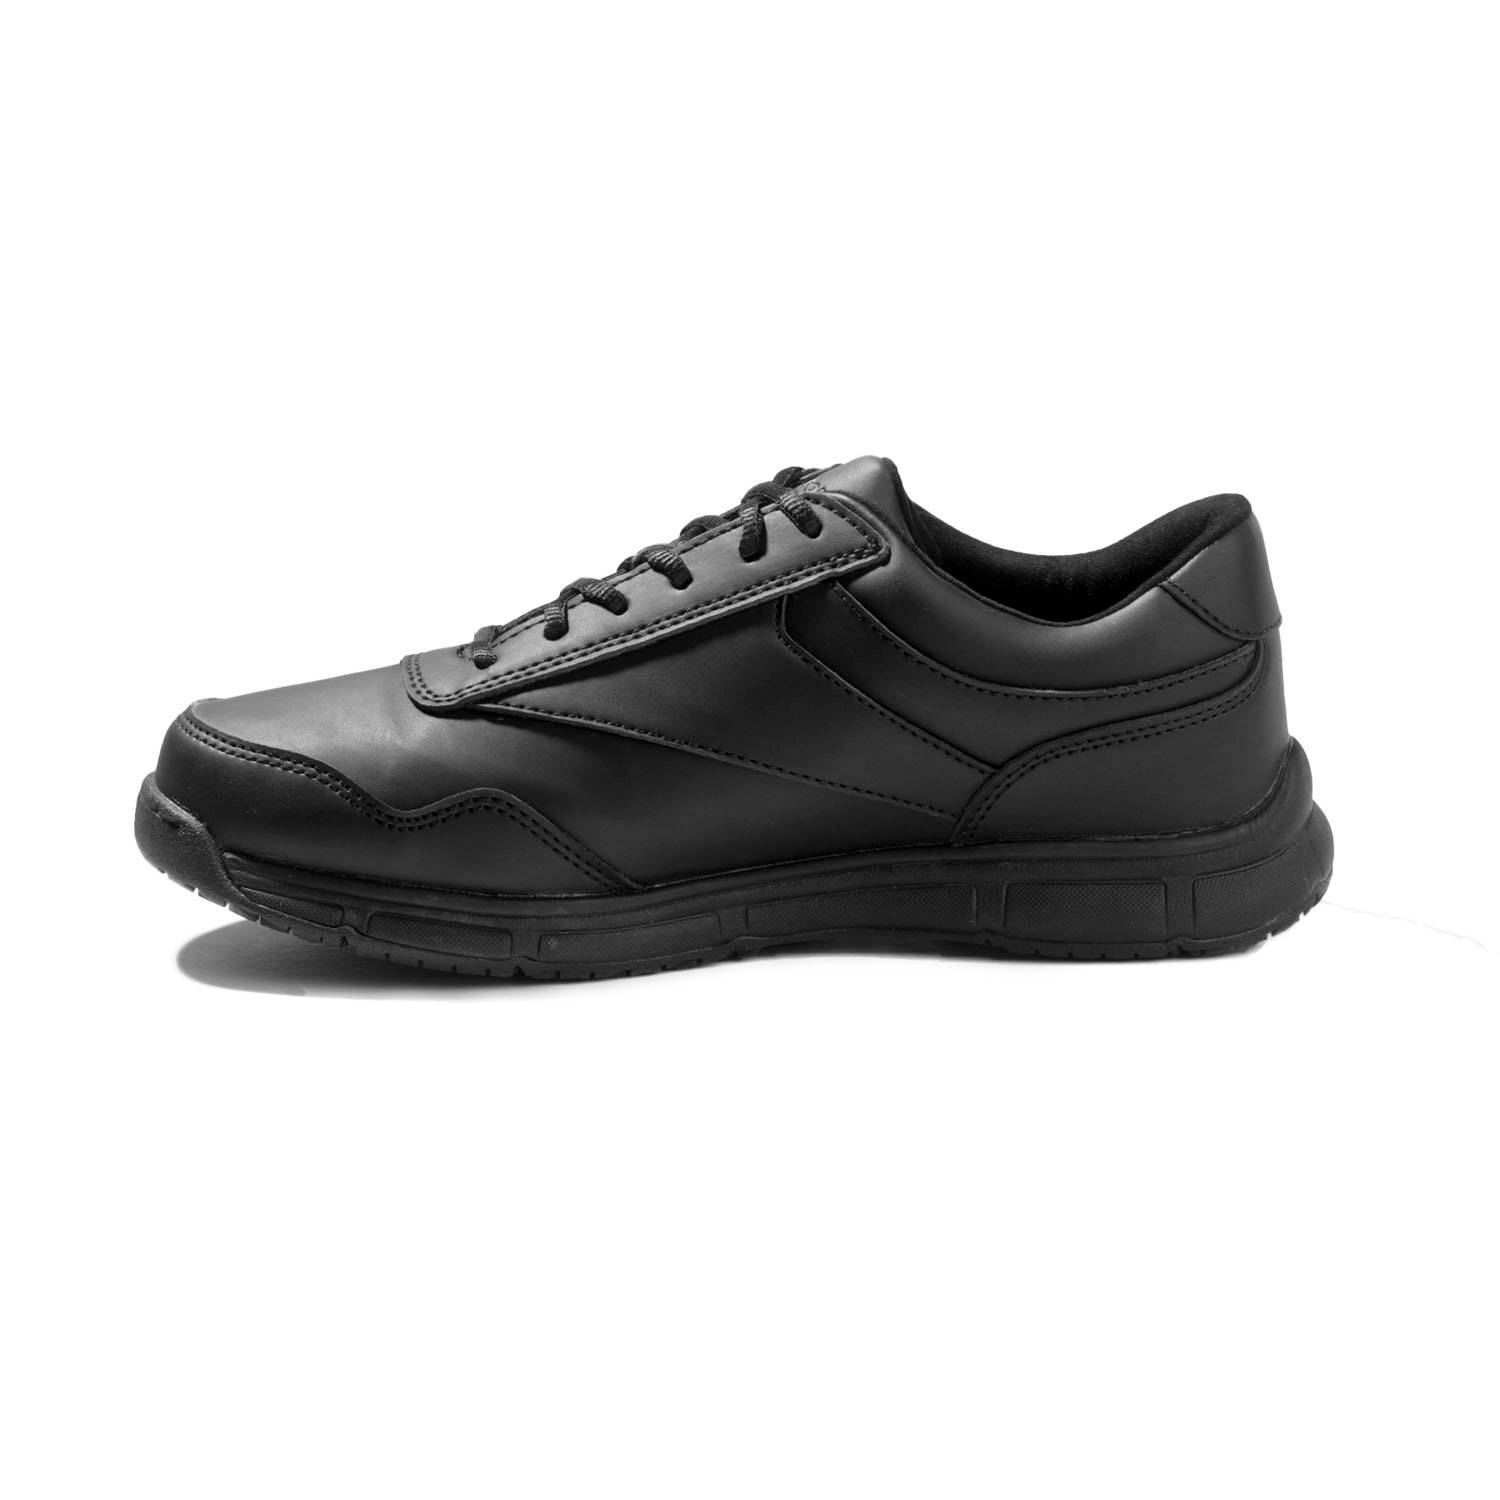 Reebok Men's Jorie LT Athletic Slip Resistant Work Shoes